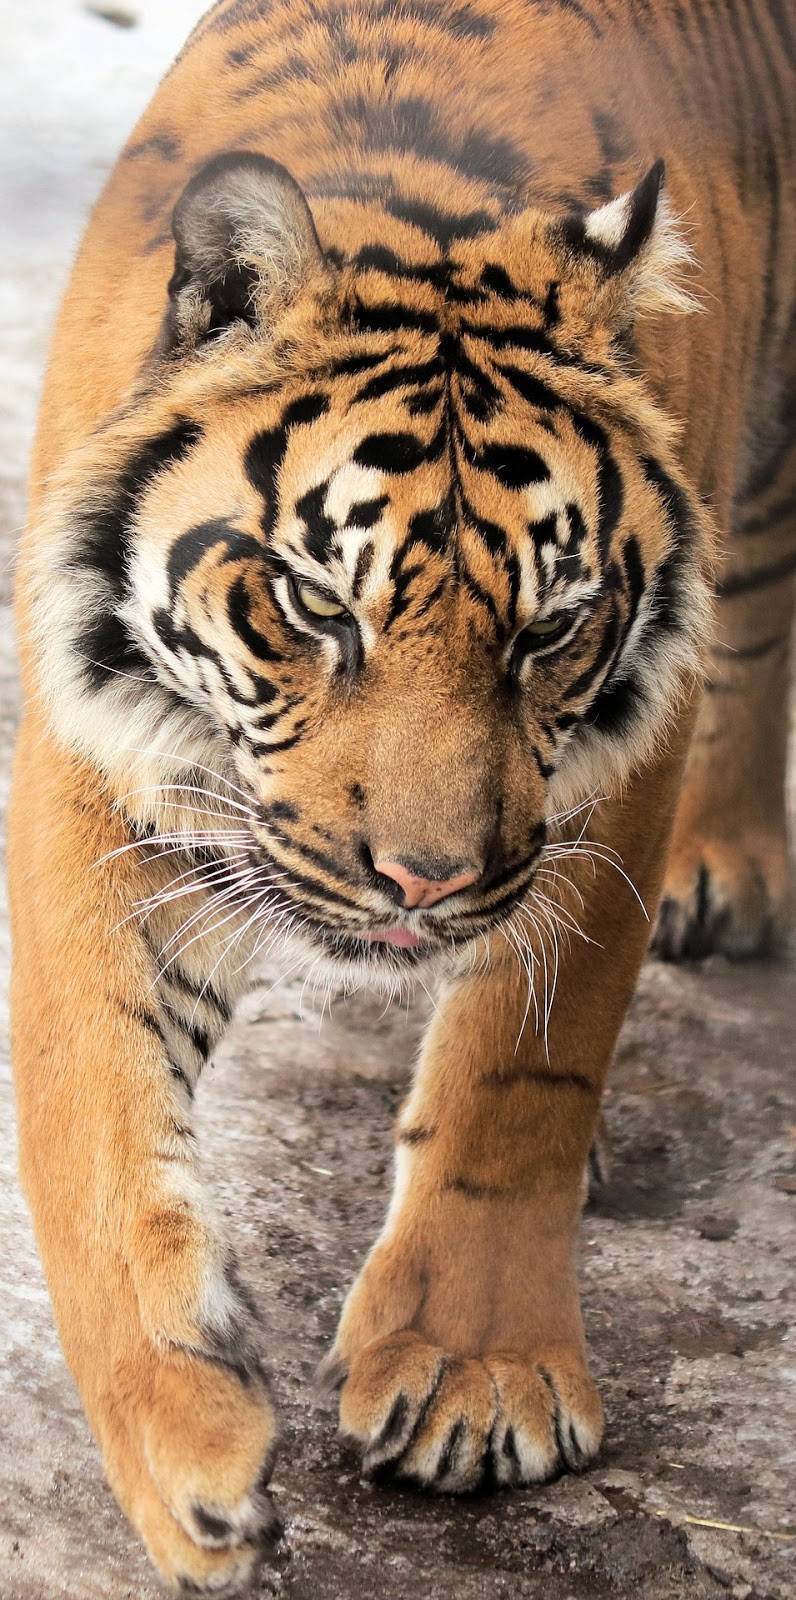 Photo of a tiger walking.